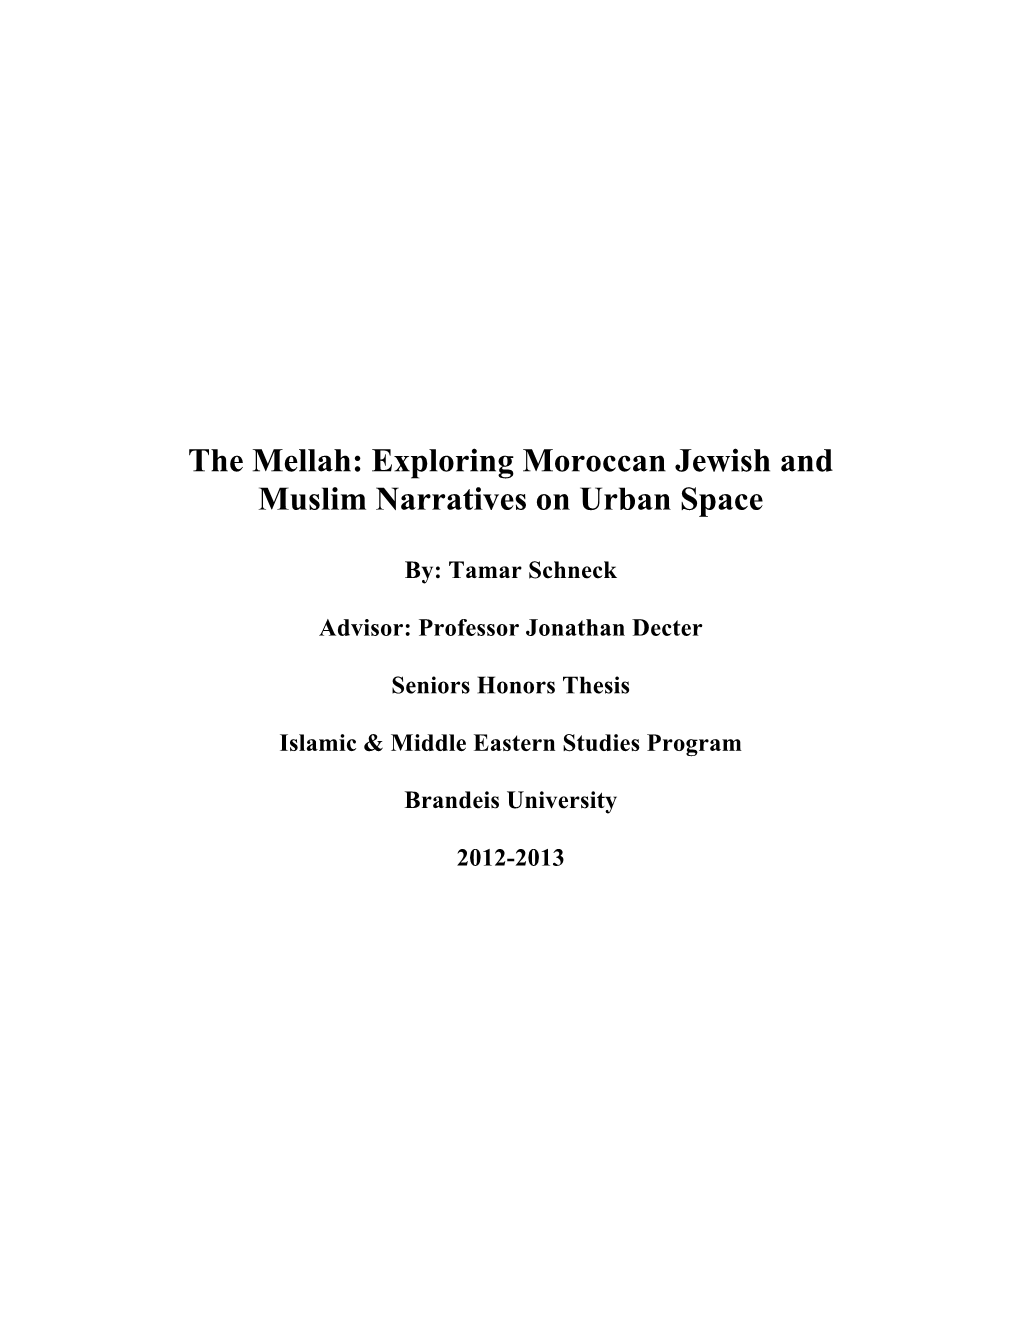 The Mellah: Exploring Moroccan Jewish and Muslim Narratives on Urban Space